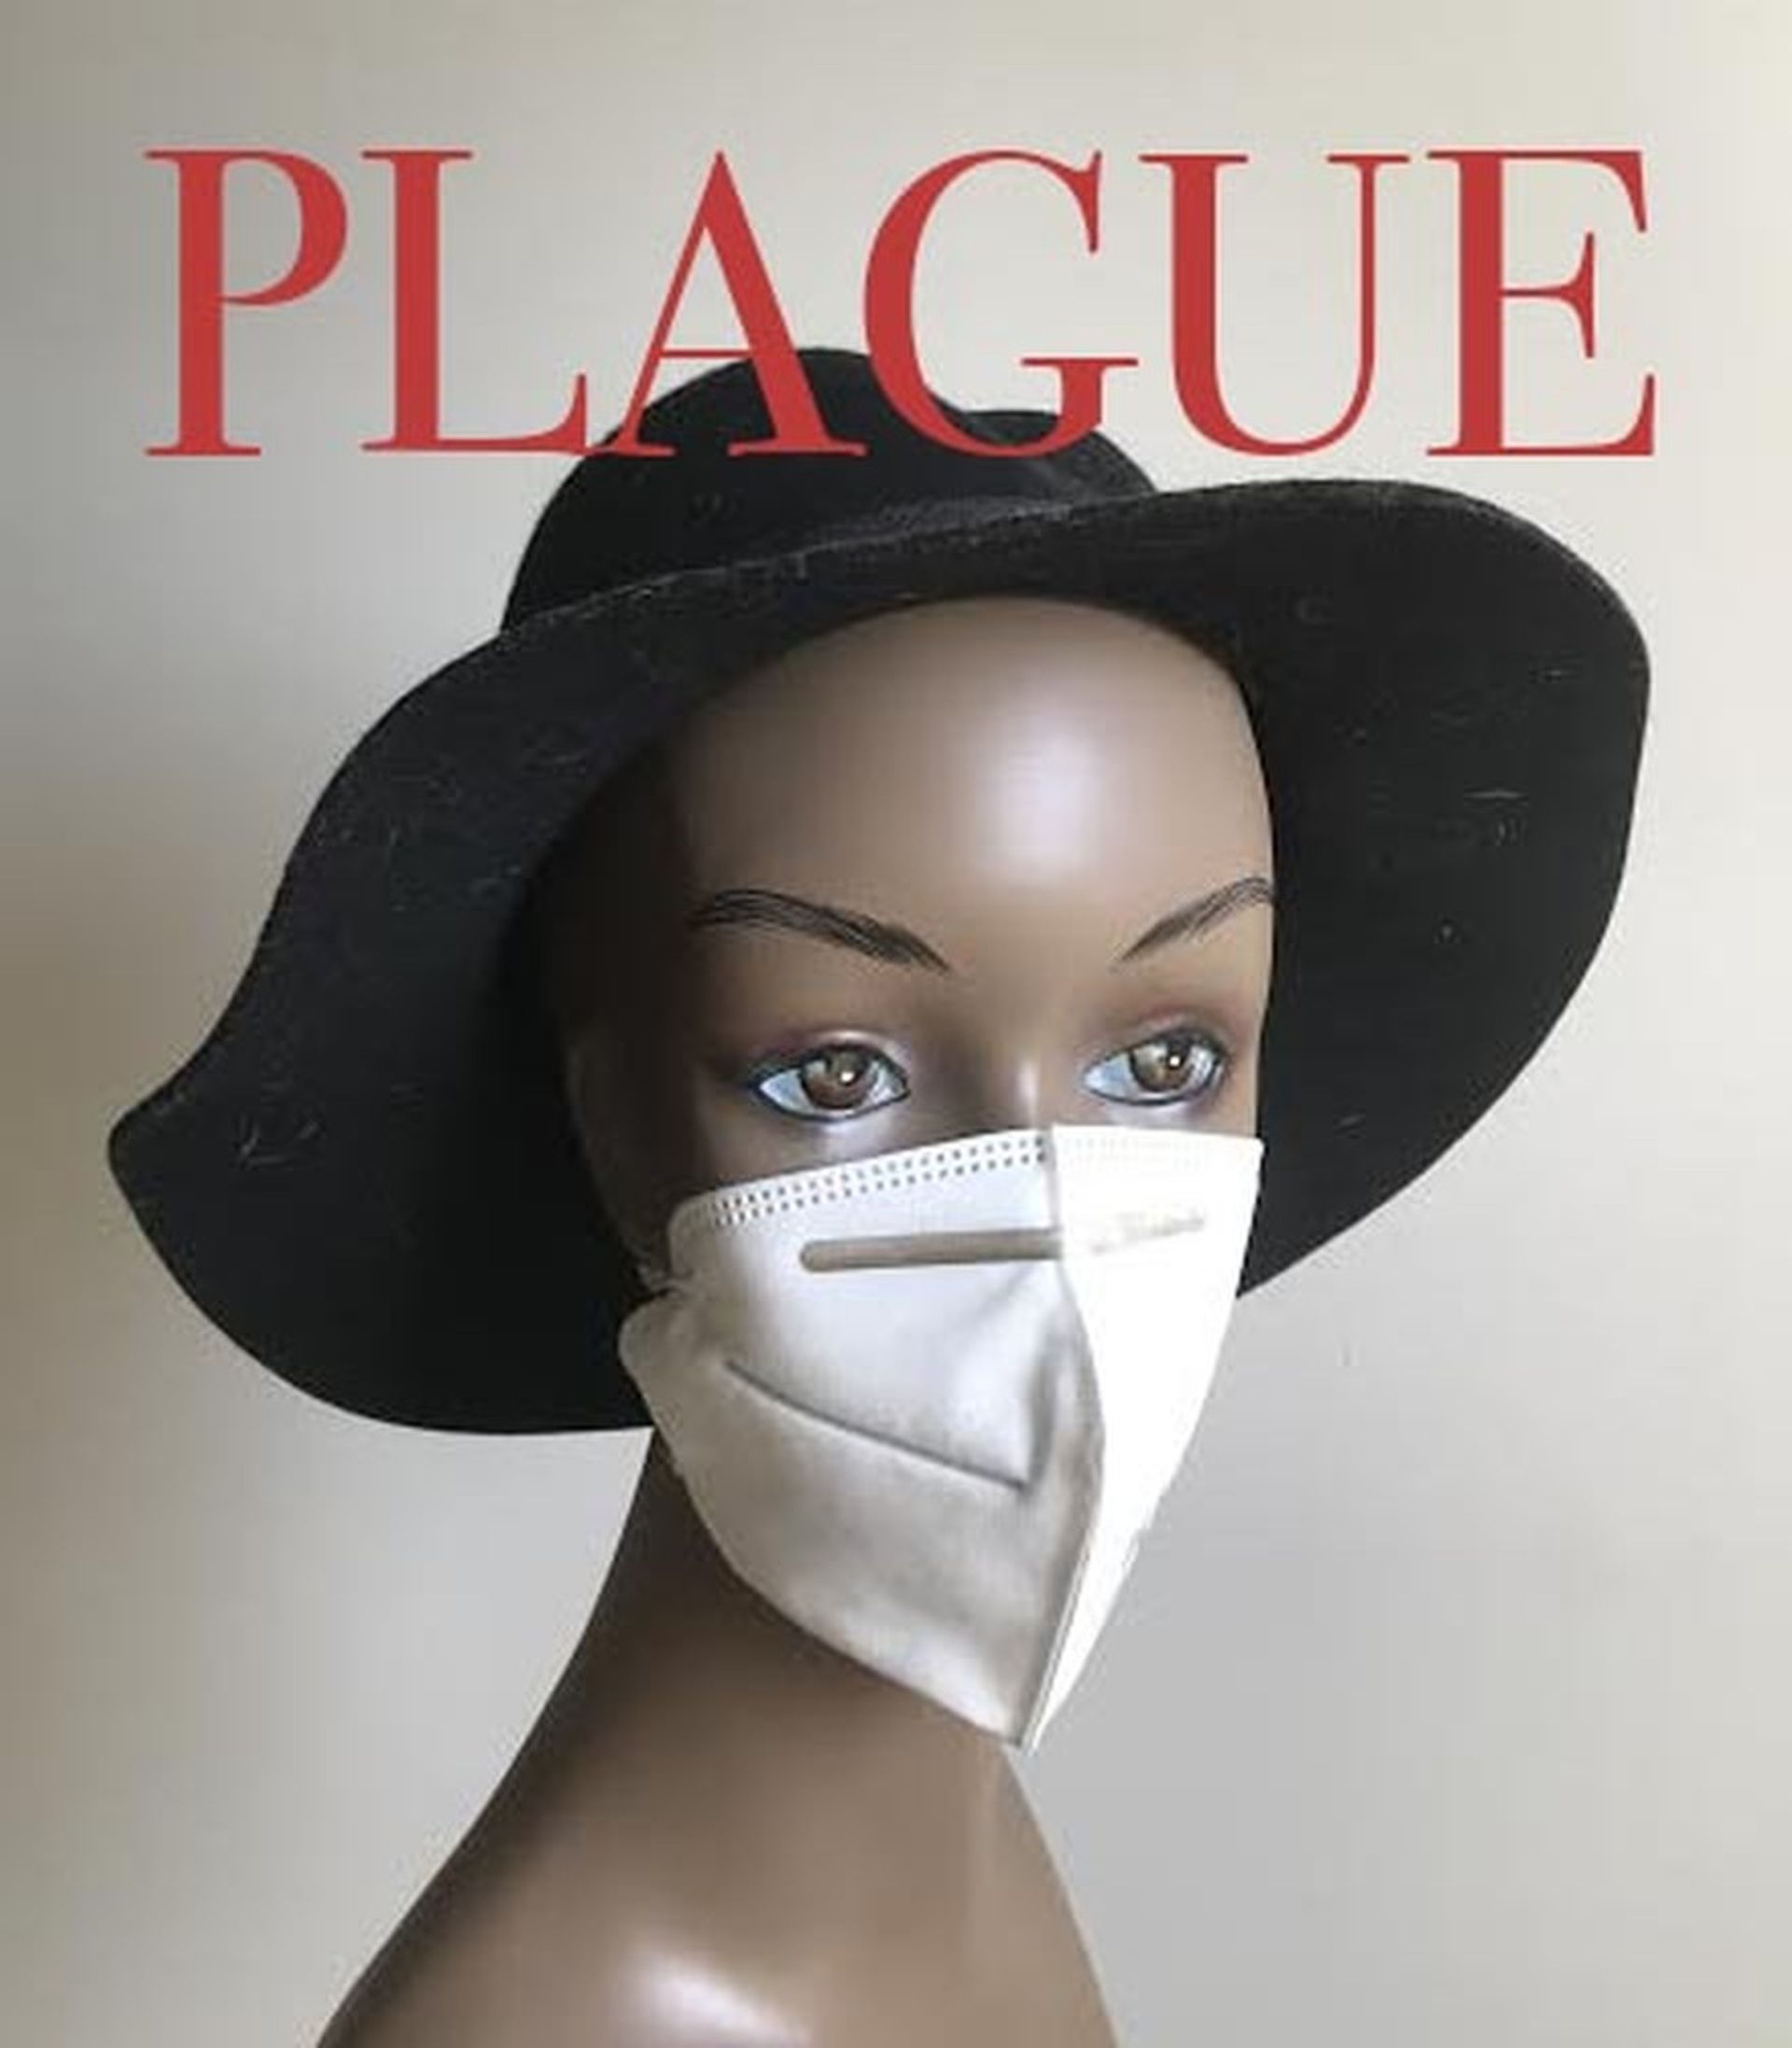 Plague (2020) by SVA faculty member Stephen Savage School of Visual Arts